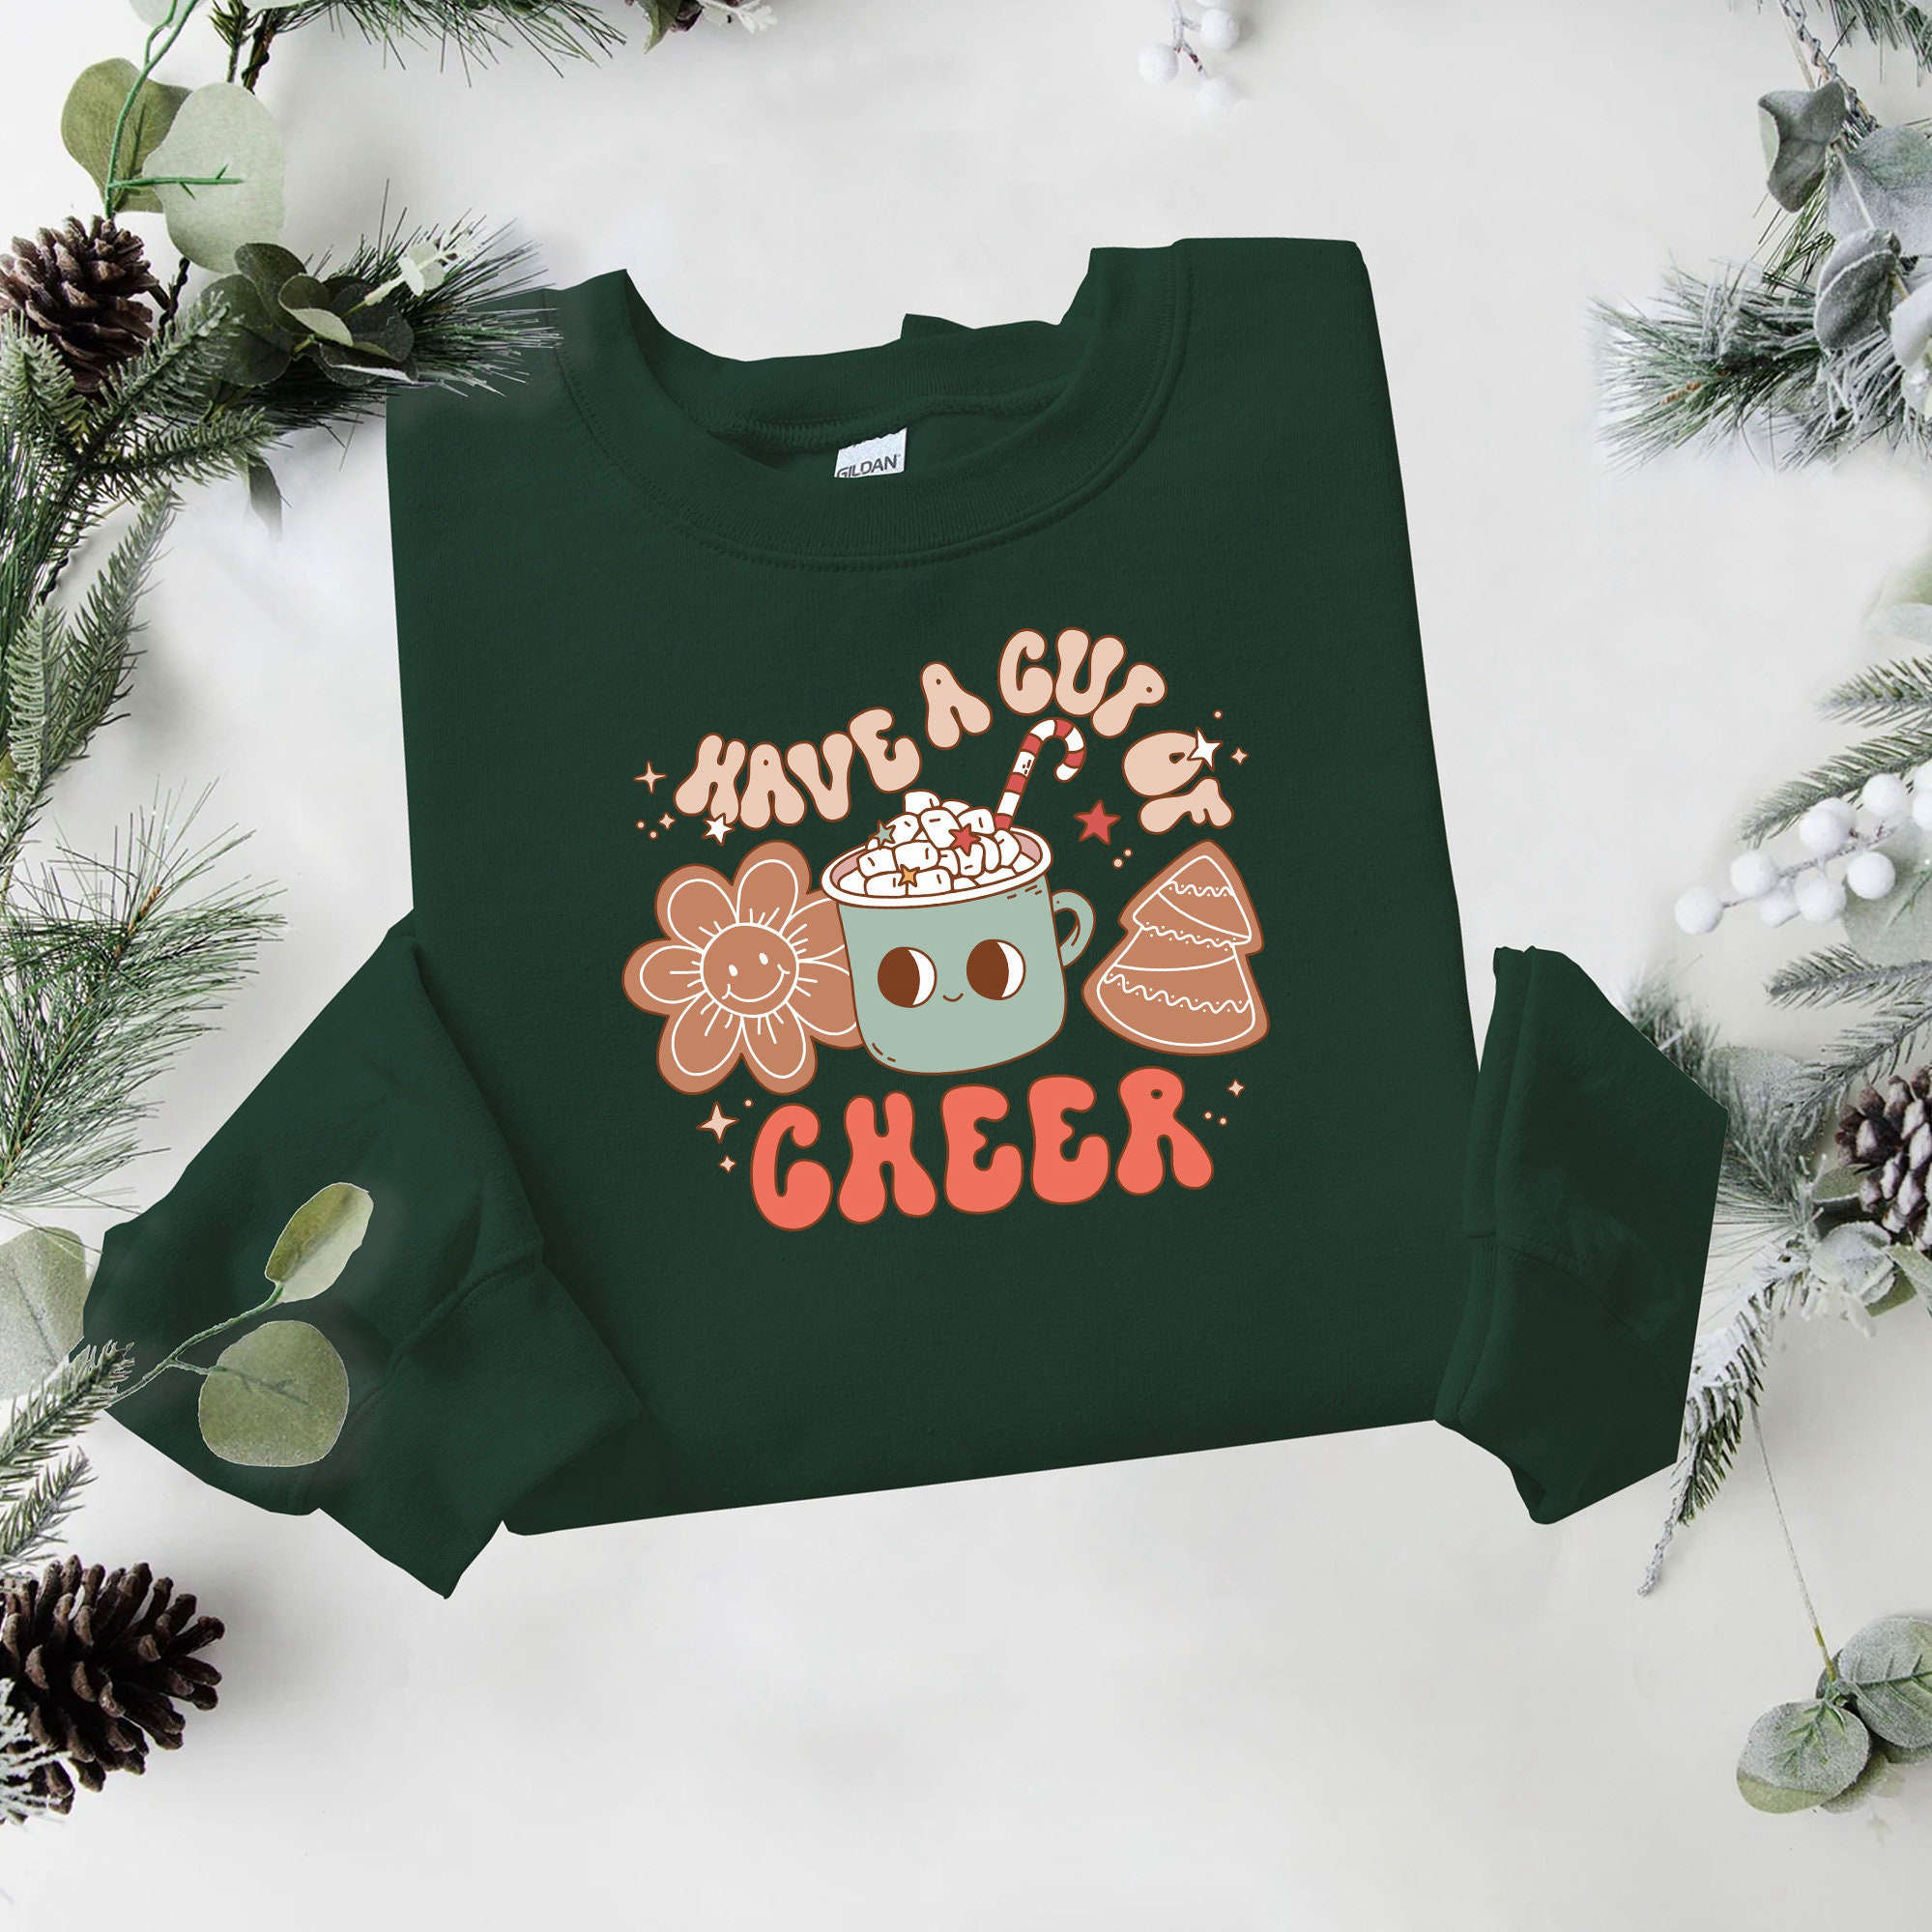 Cup Of Cheer Christmas Shirt, Christmas Sweatshirt, Womens Christmas Shirt, Christmas Gift, Christmas Sweater, Holiday Retro Sw eatshirt